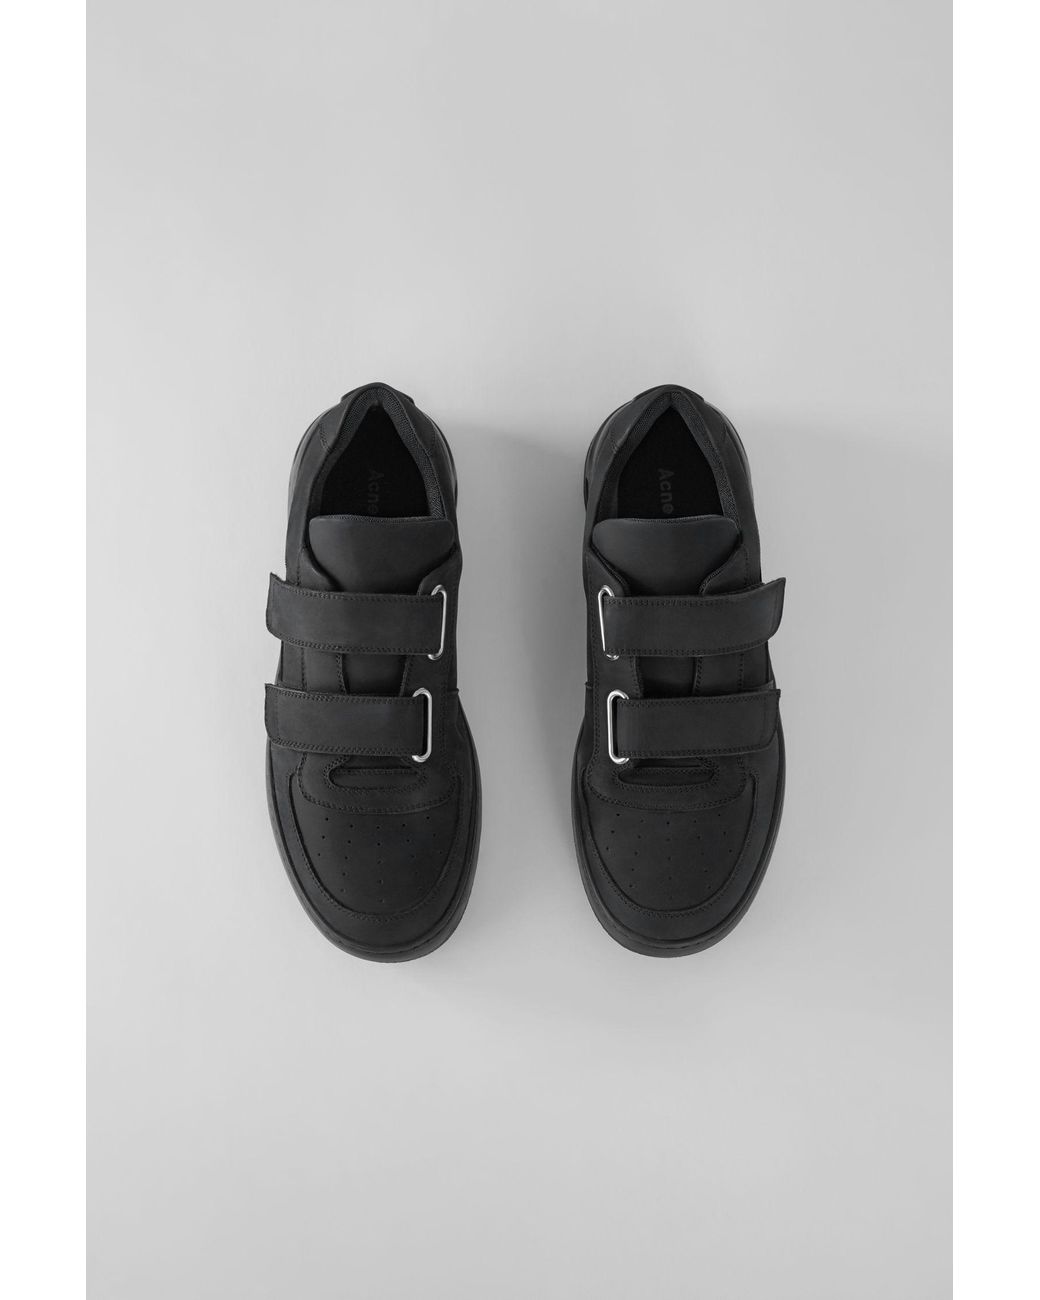 Acne Studios Velcro Sneakers black for Men | Lyst